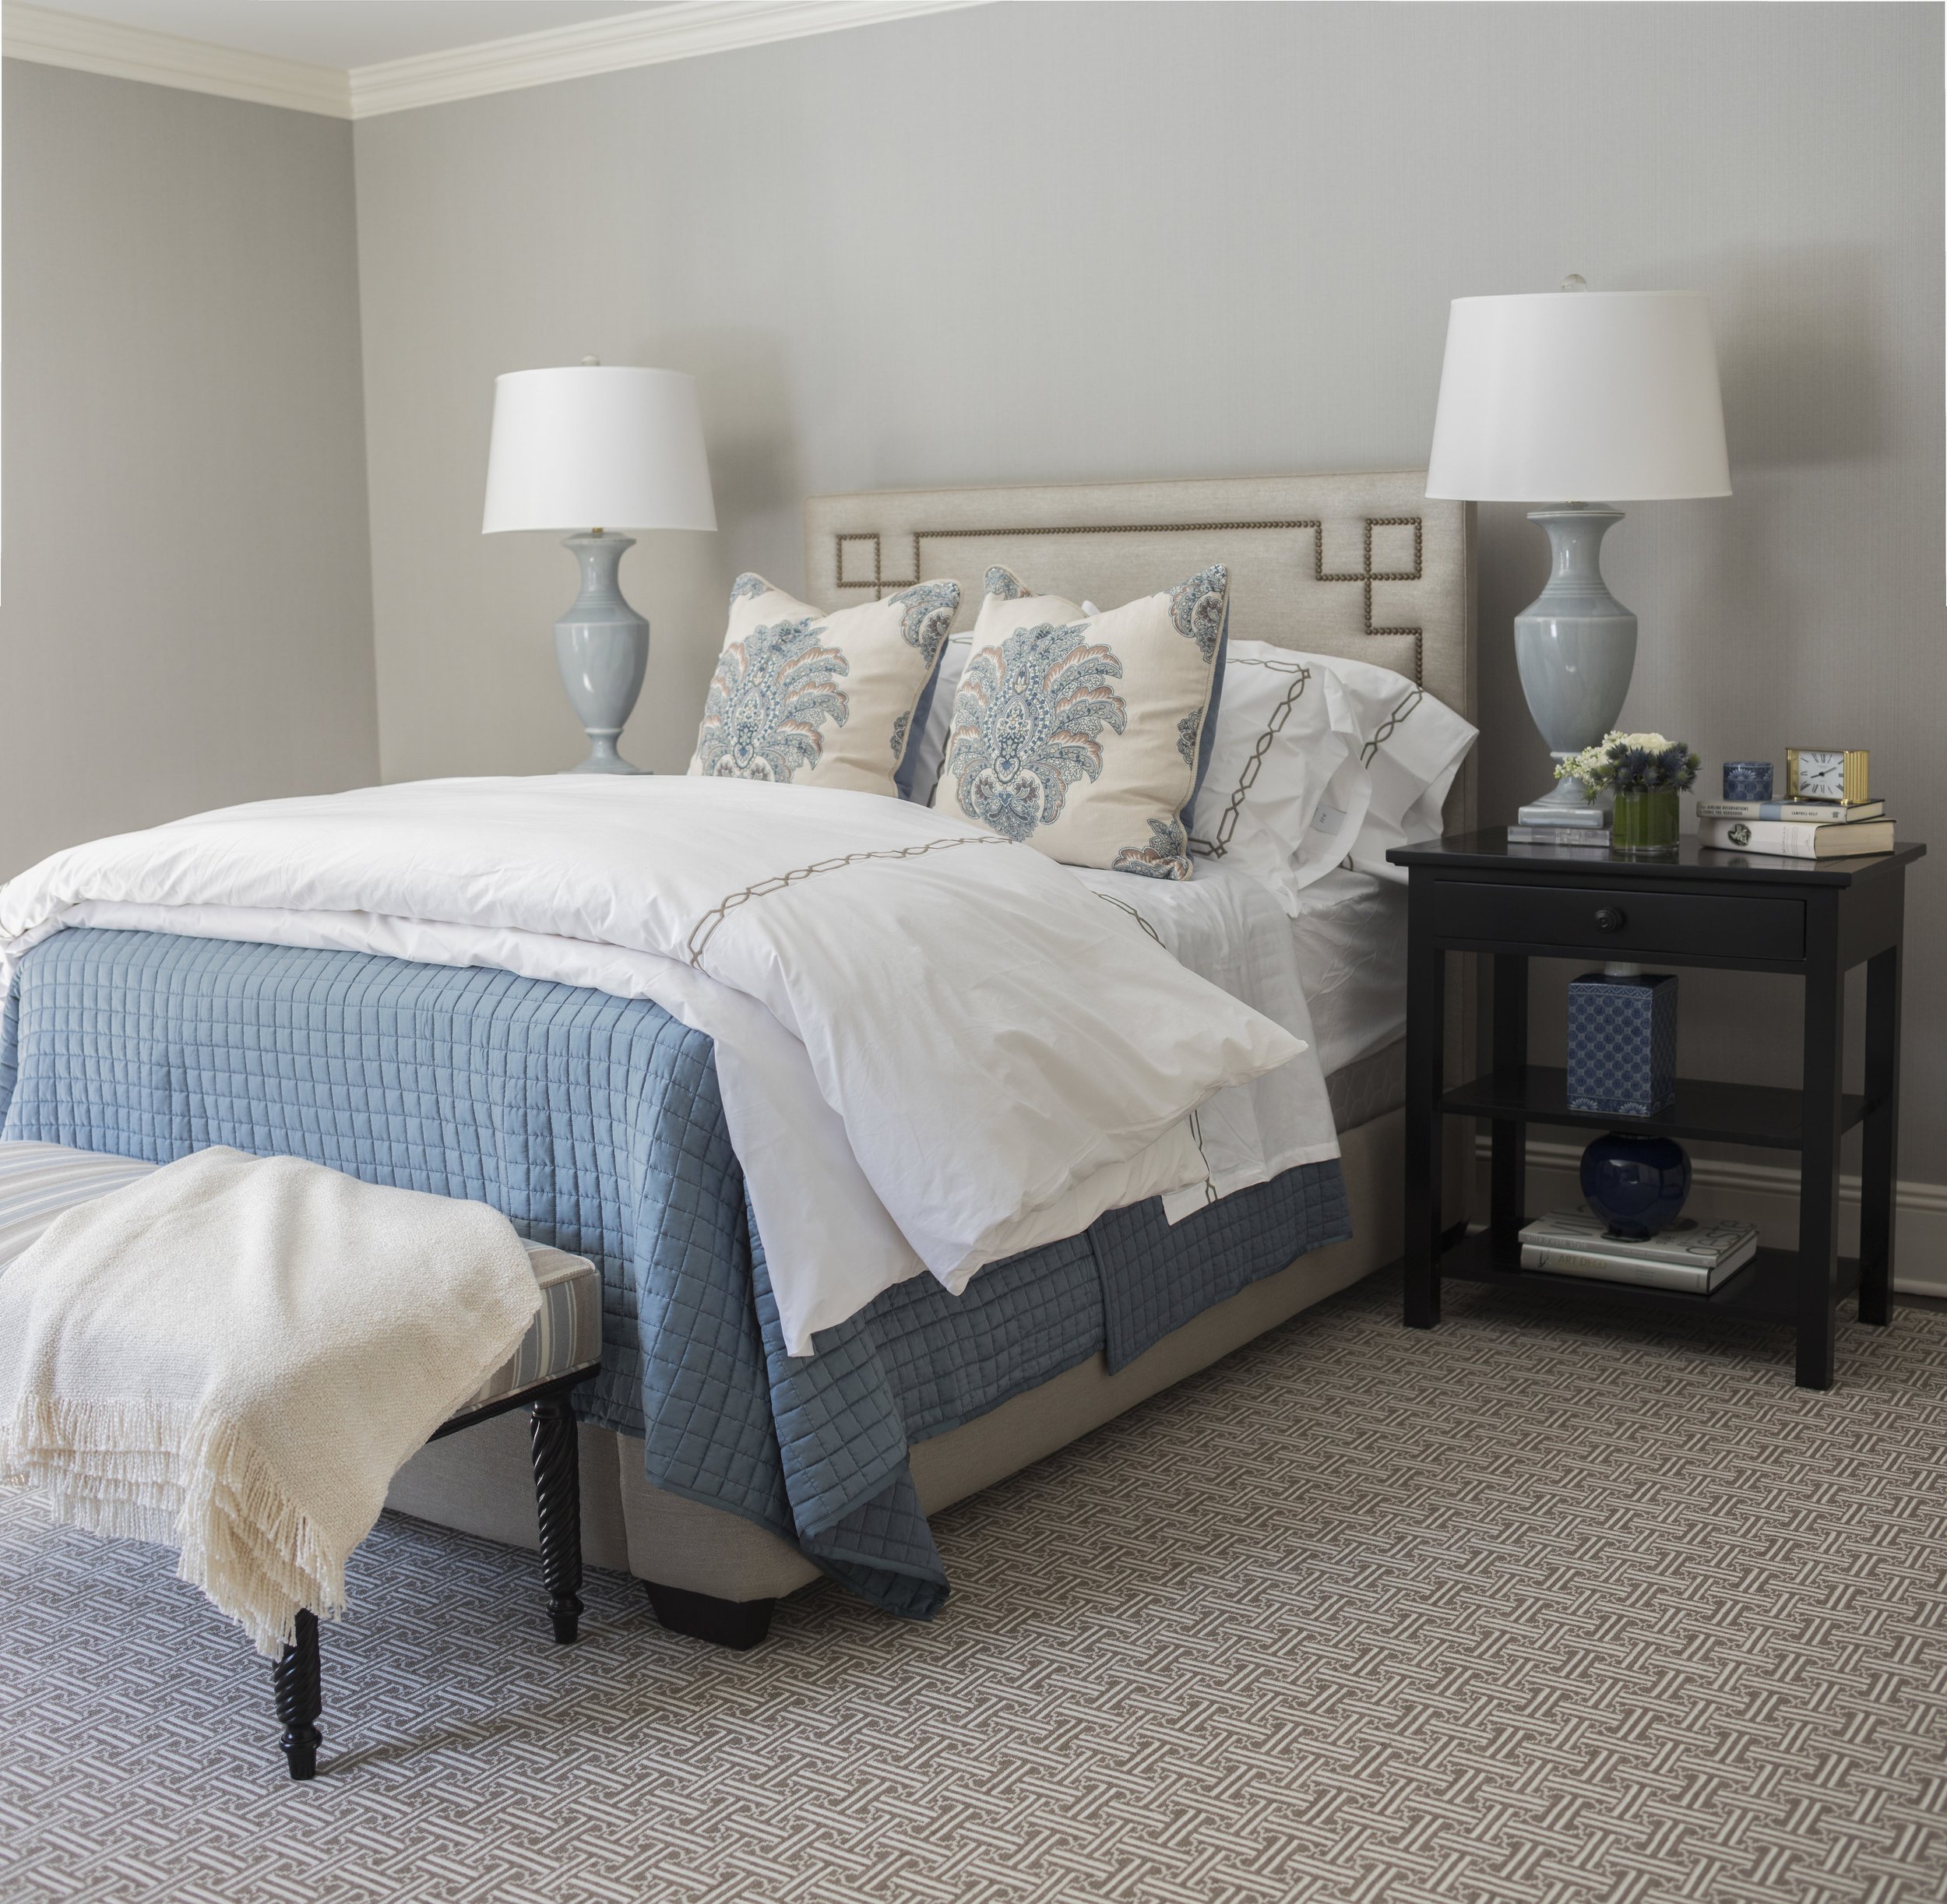 64-bedroom-blue-coastal-pattern-chic-rinfret-neoclassical-greenwich-connecticut.JPG